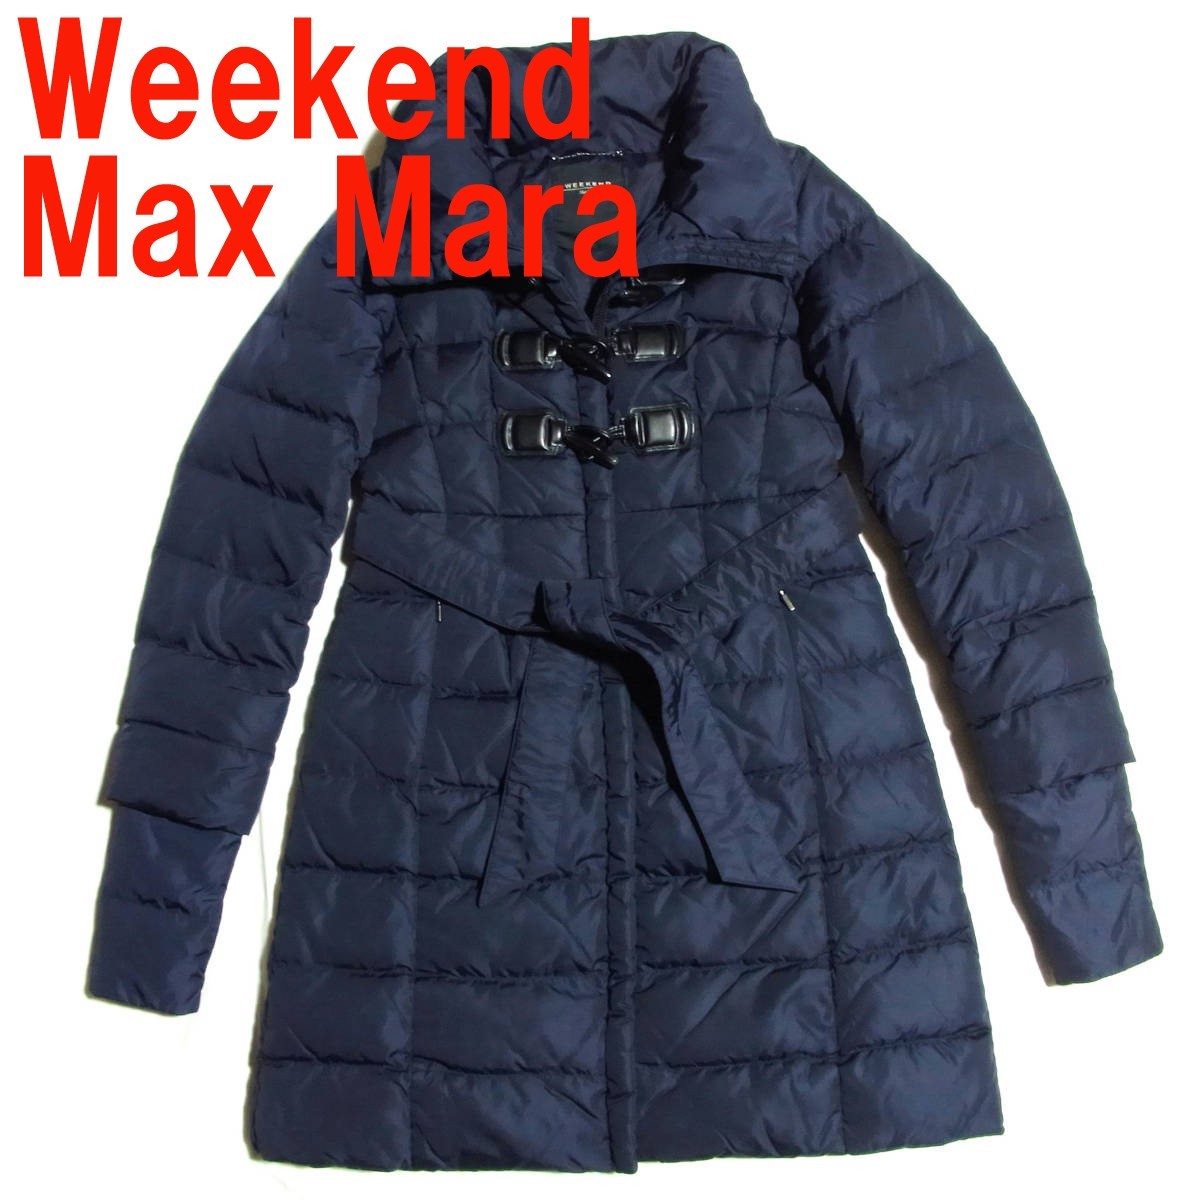 Weekend Max Mara ウィークエンド マックスマーラ ダッフル ダウン